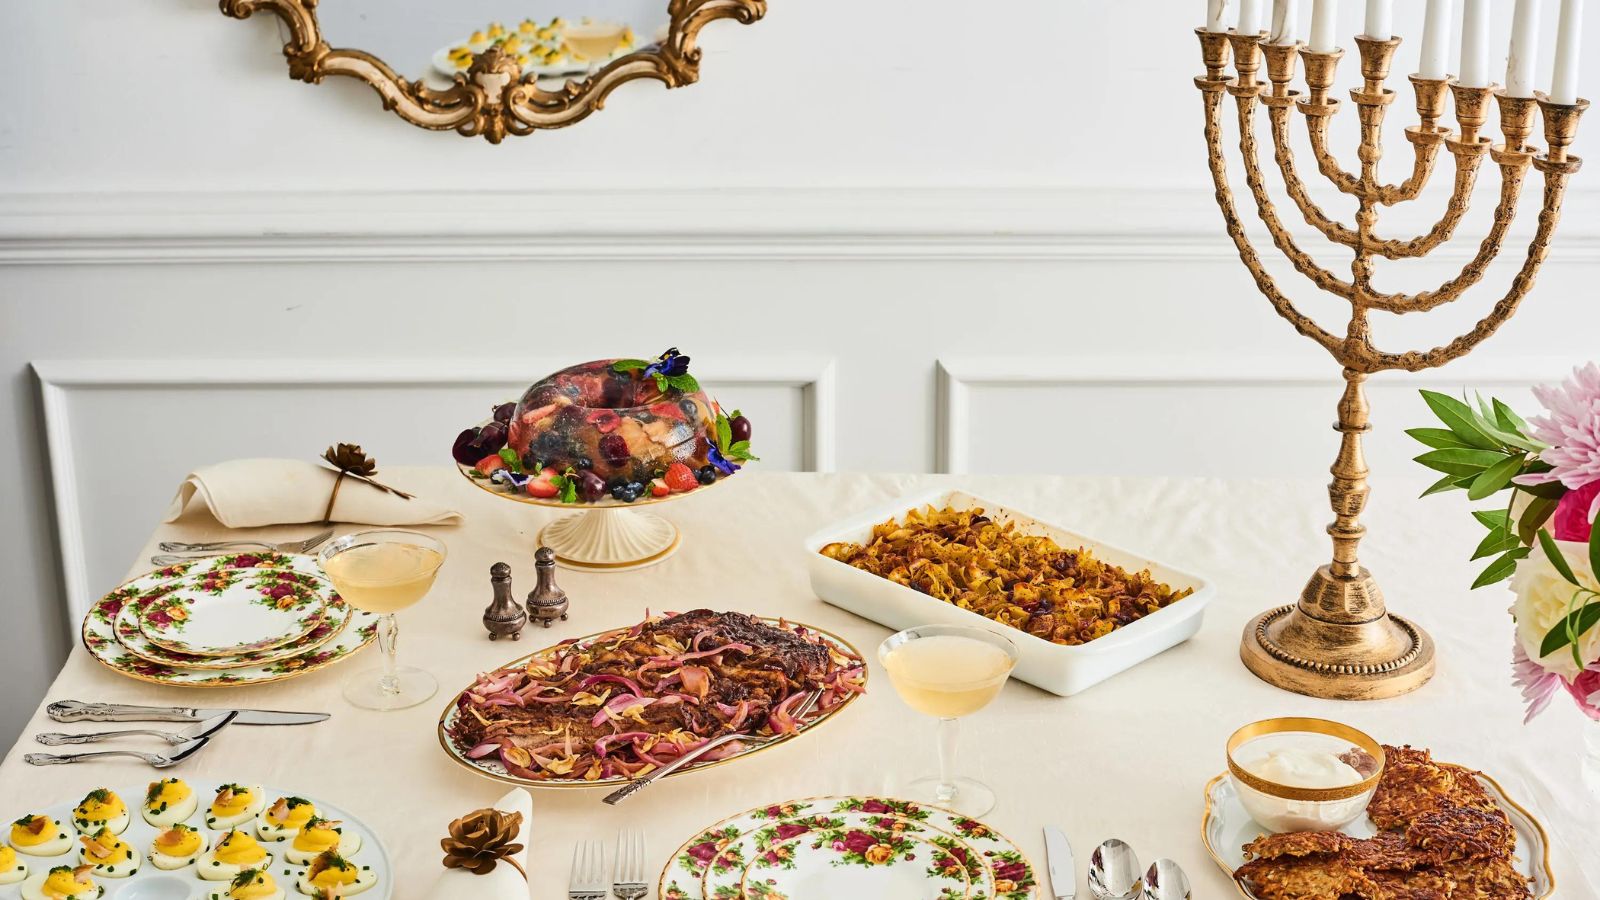 Hanukkah Food Table Display with Menorah 